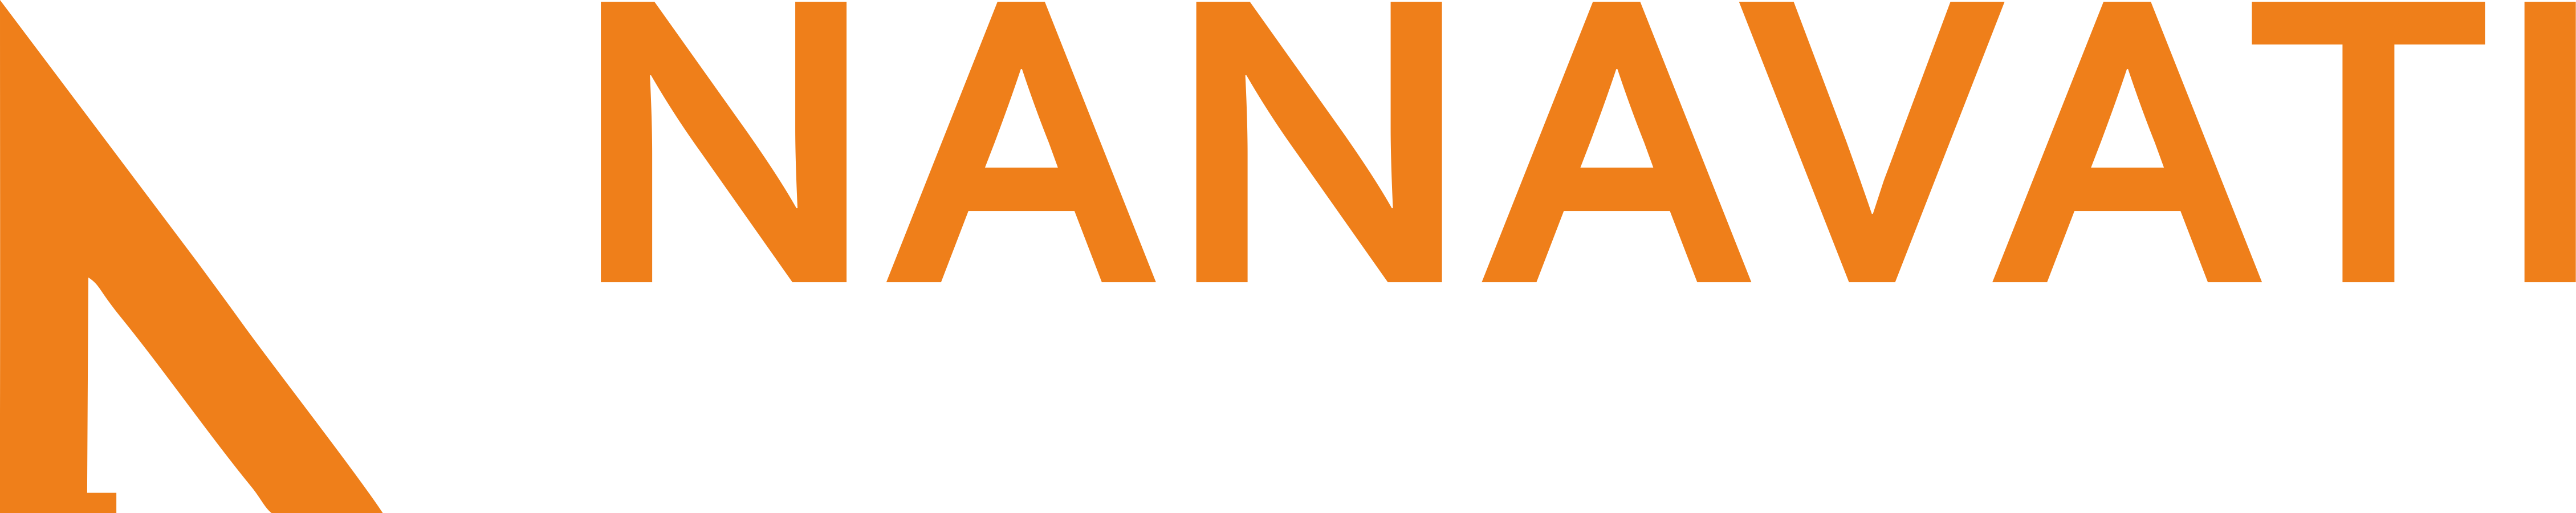 Nanavati Ventures Limited Logo